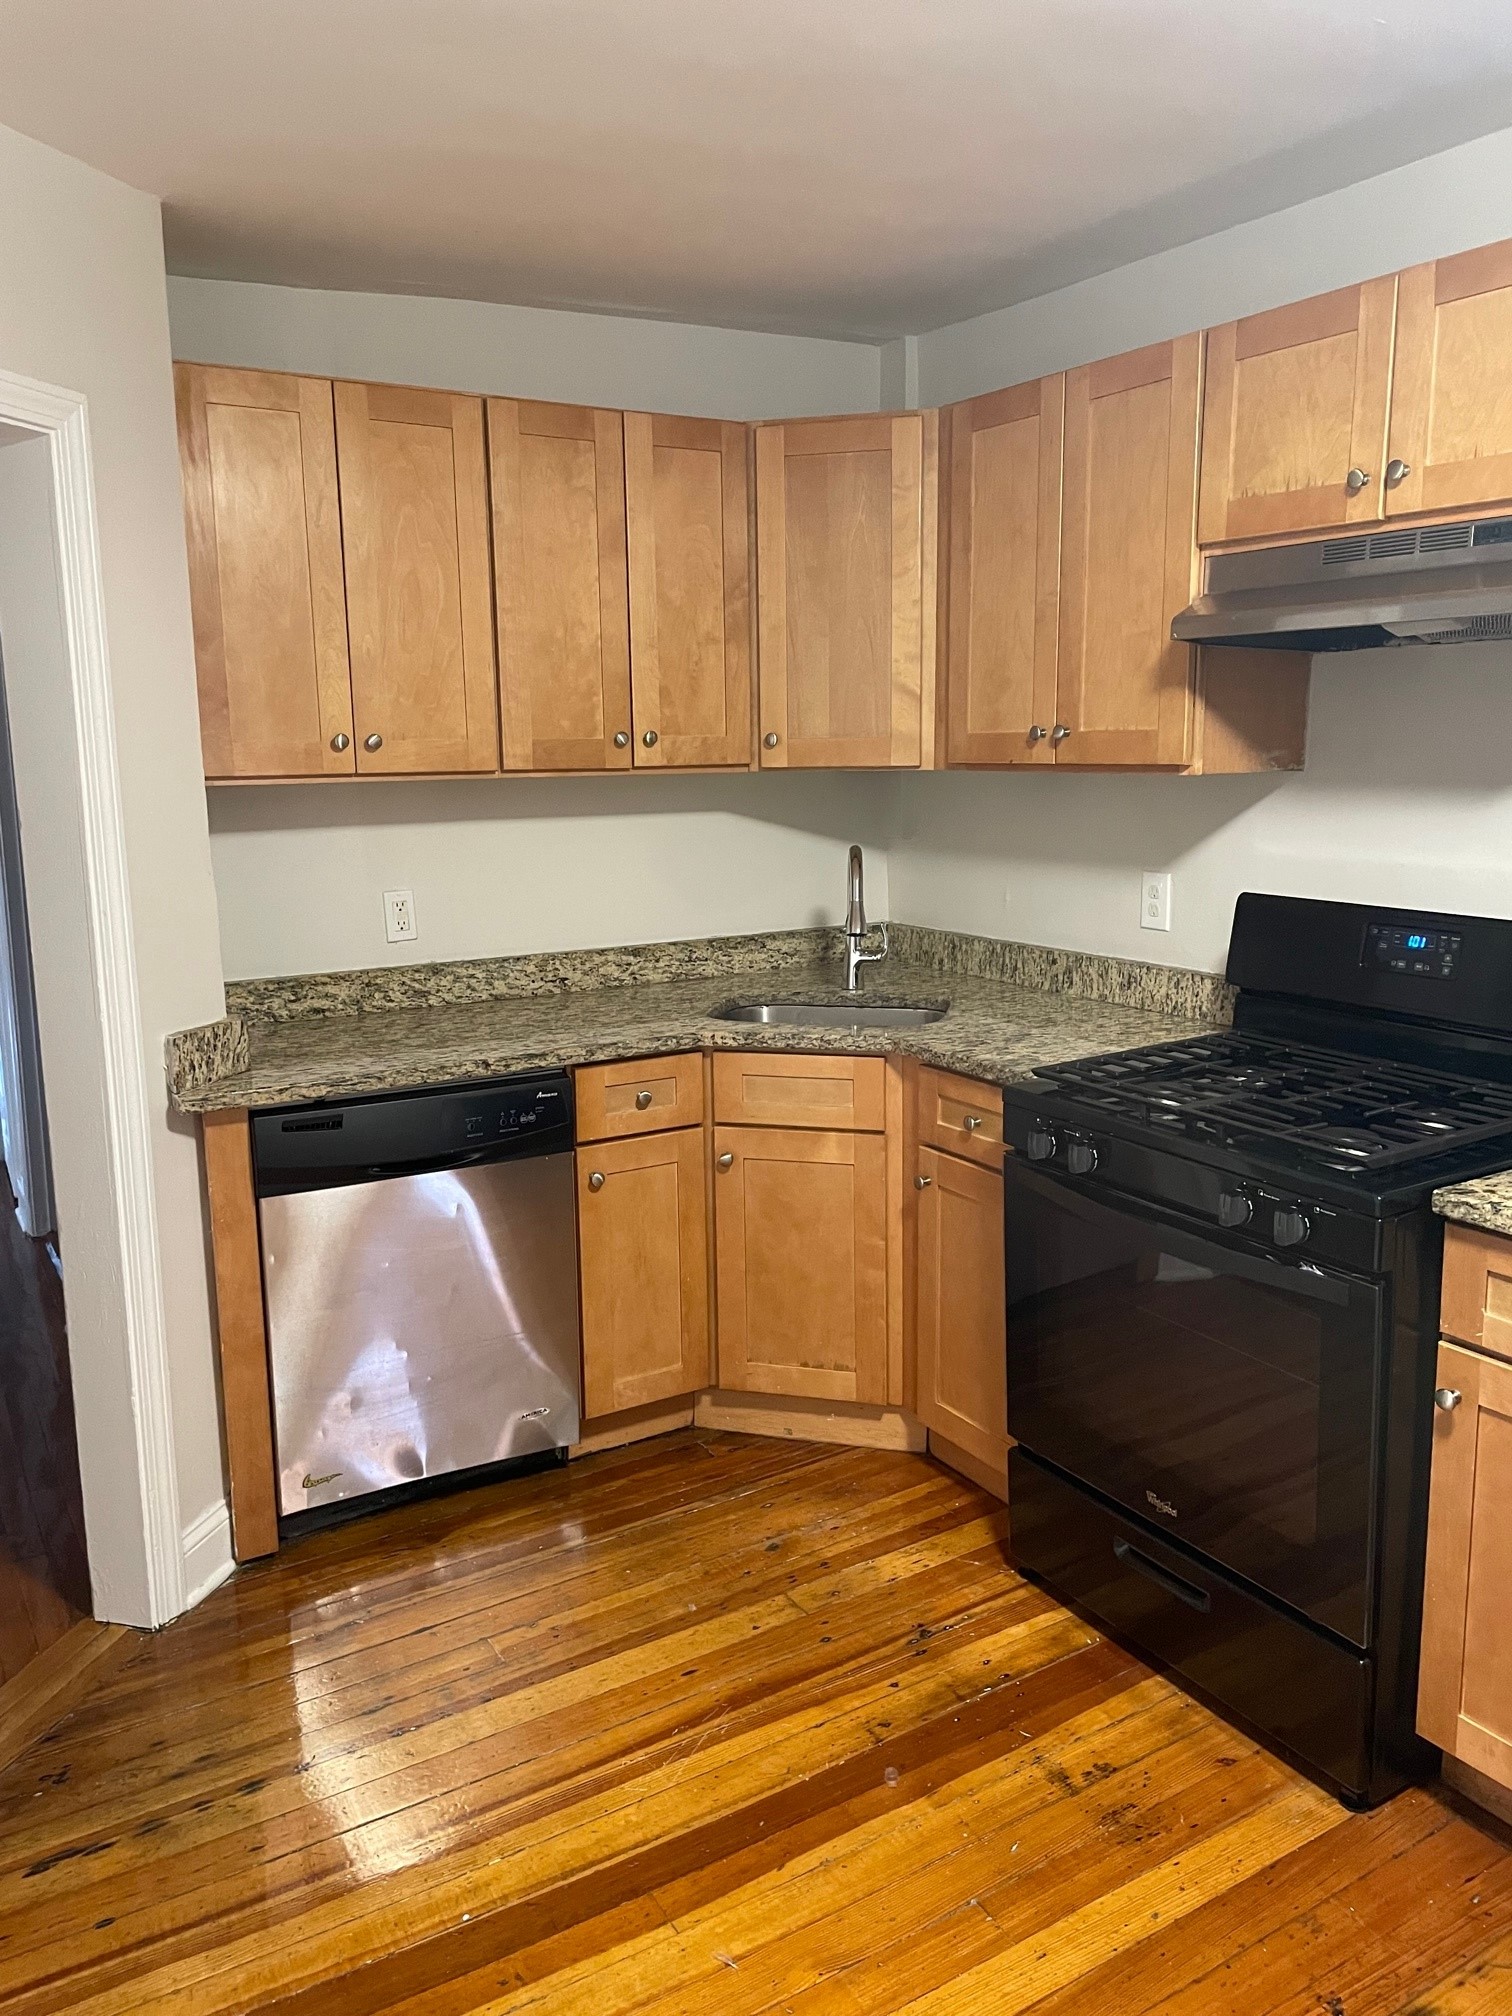 Photos of apartment on Beech Glen St.,Boston MA 02119